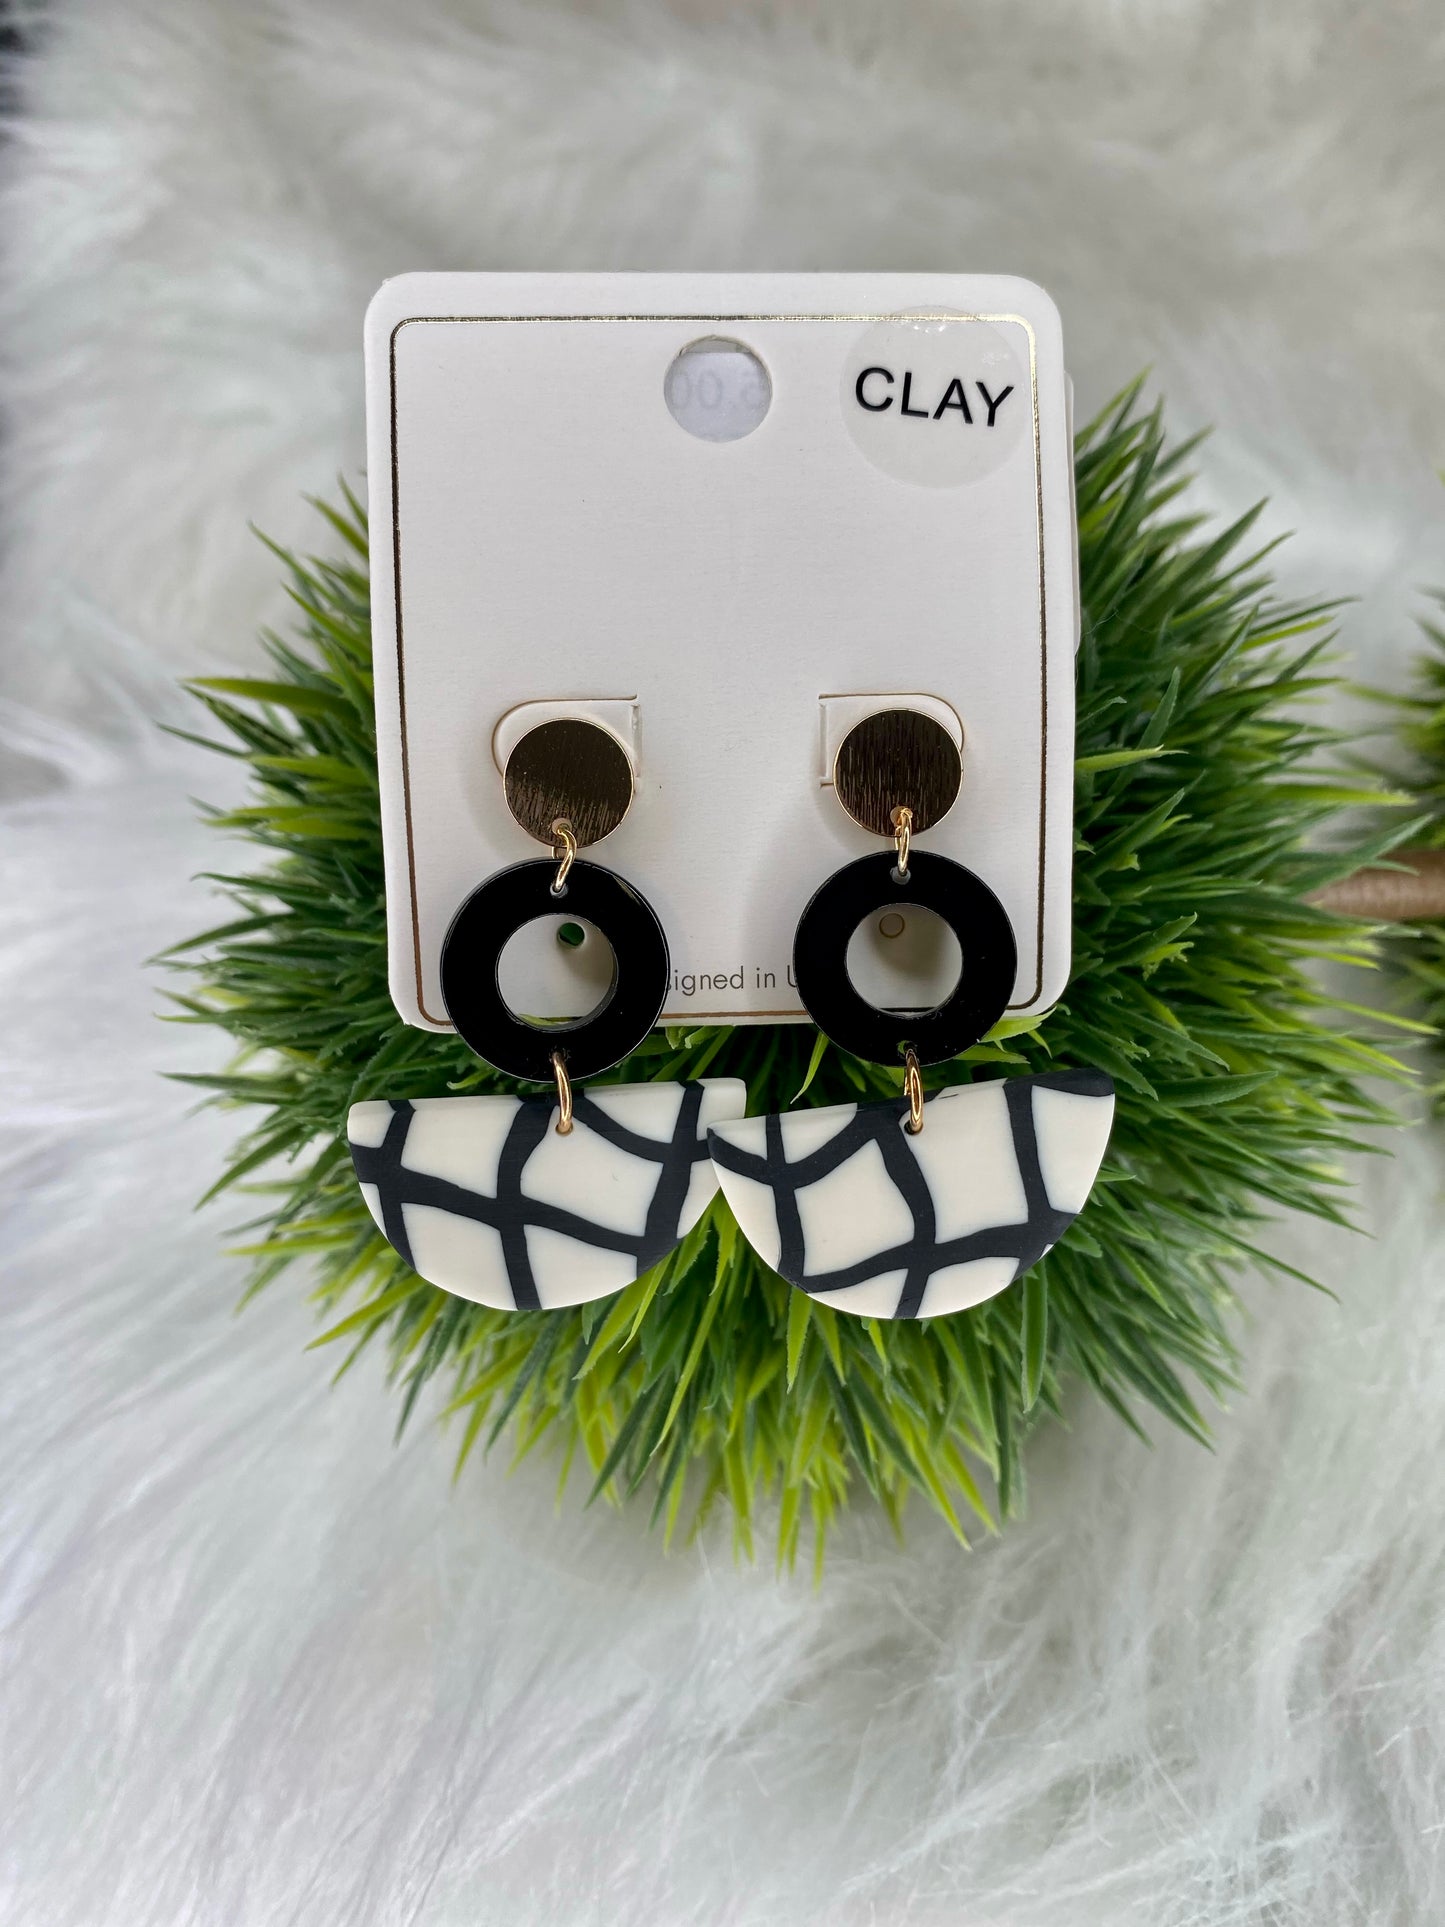 Resin Circle & Clay Moon Earrings